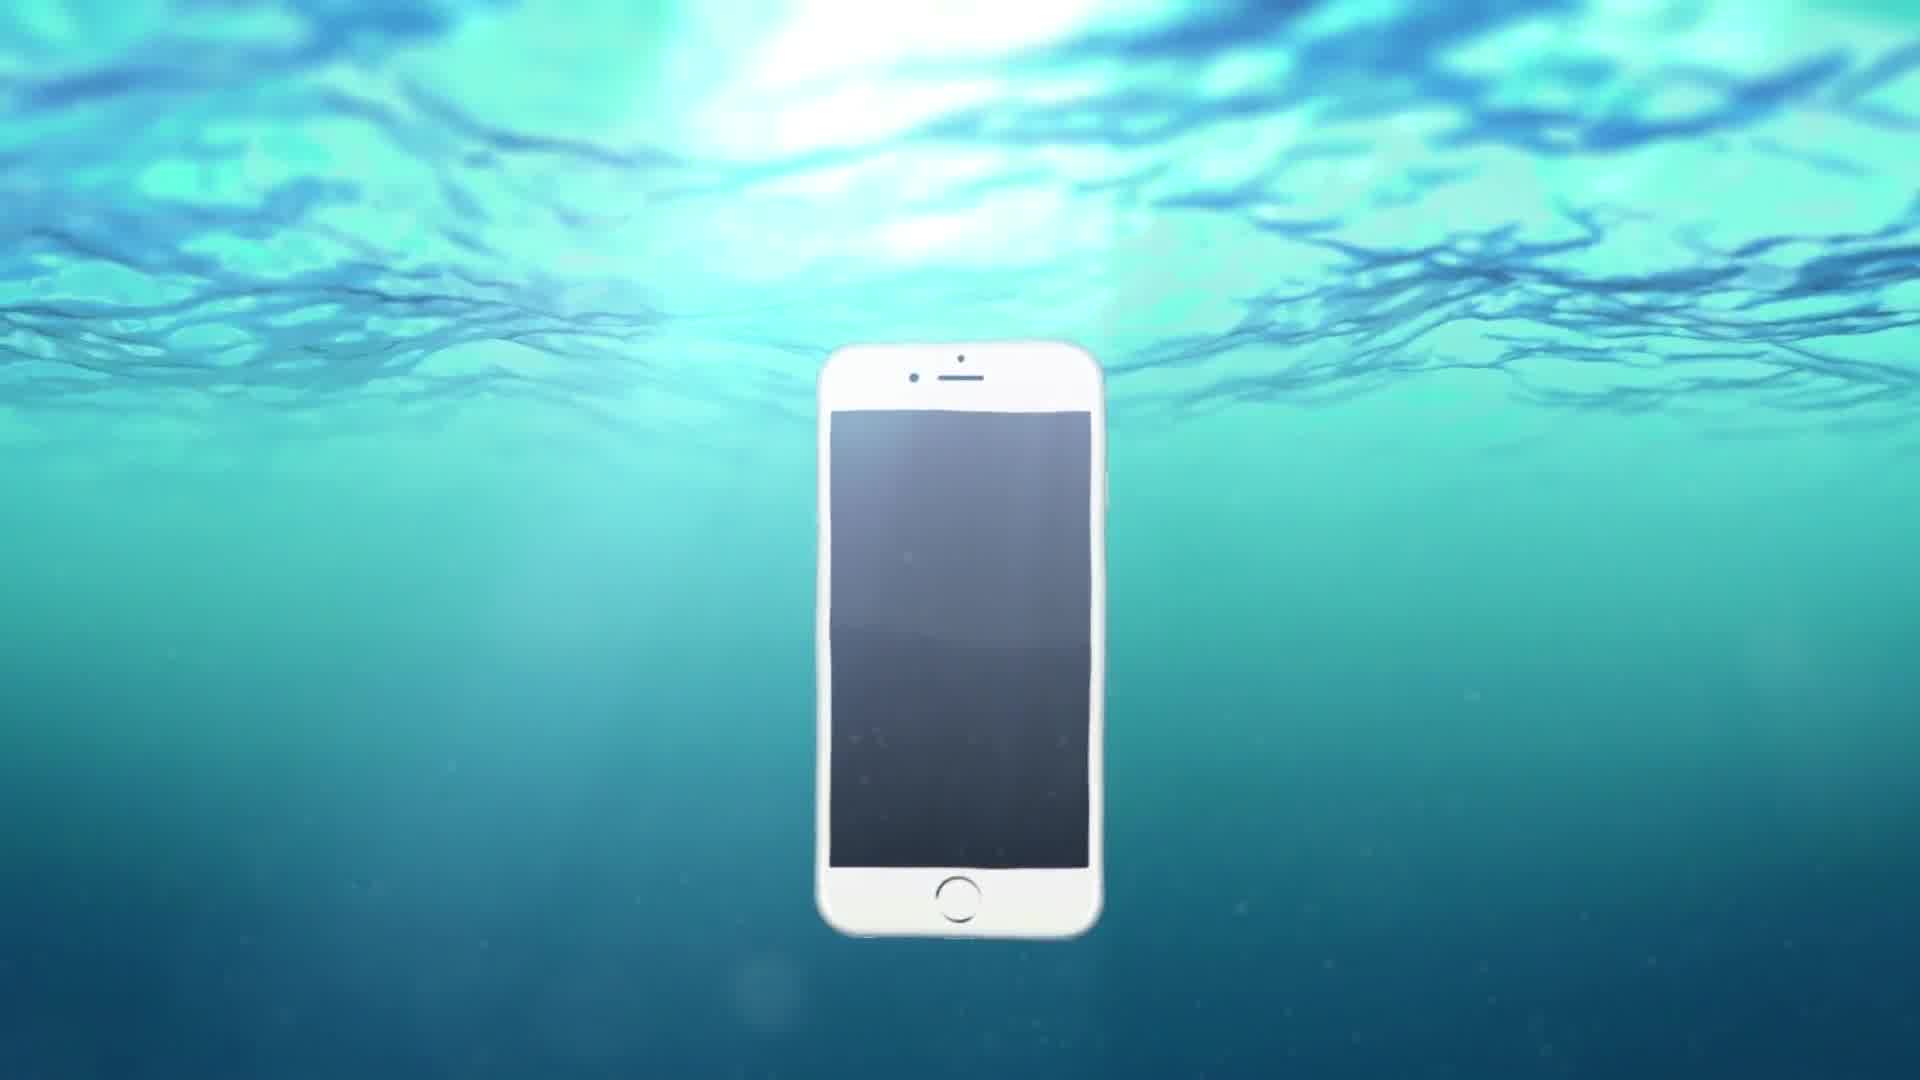 Underwater - Download Videohive 9324834